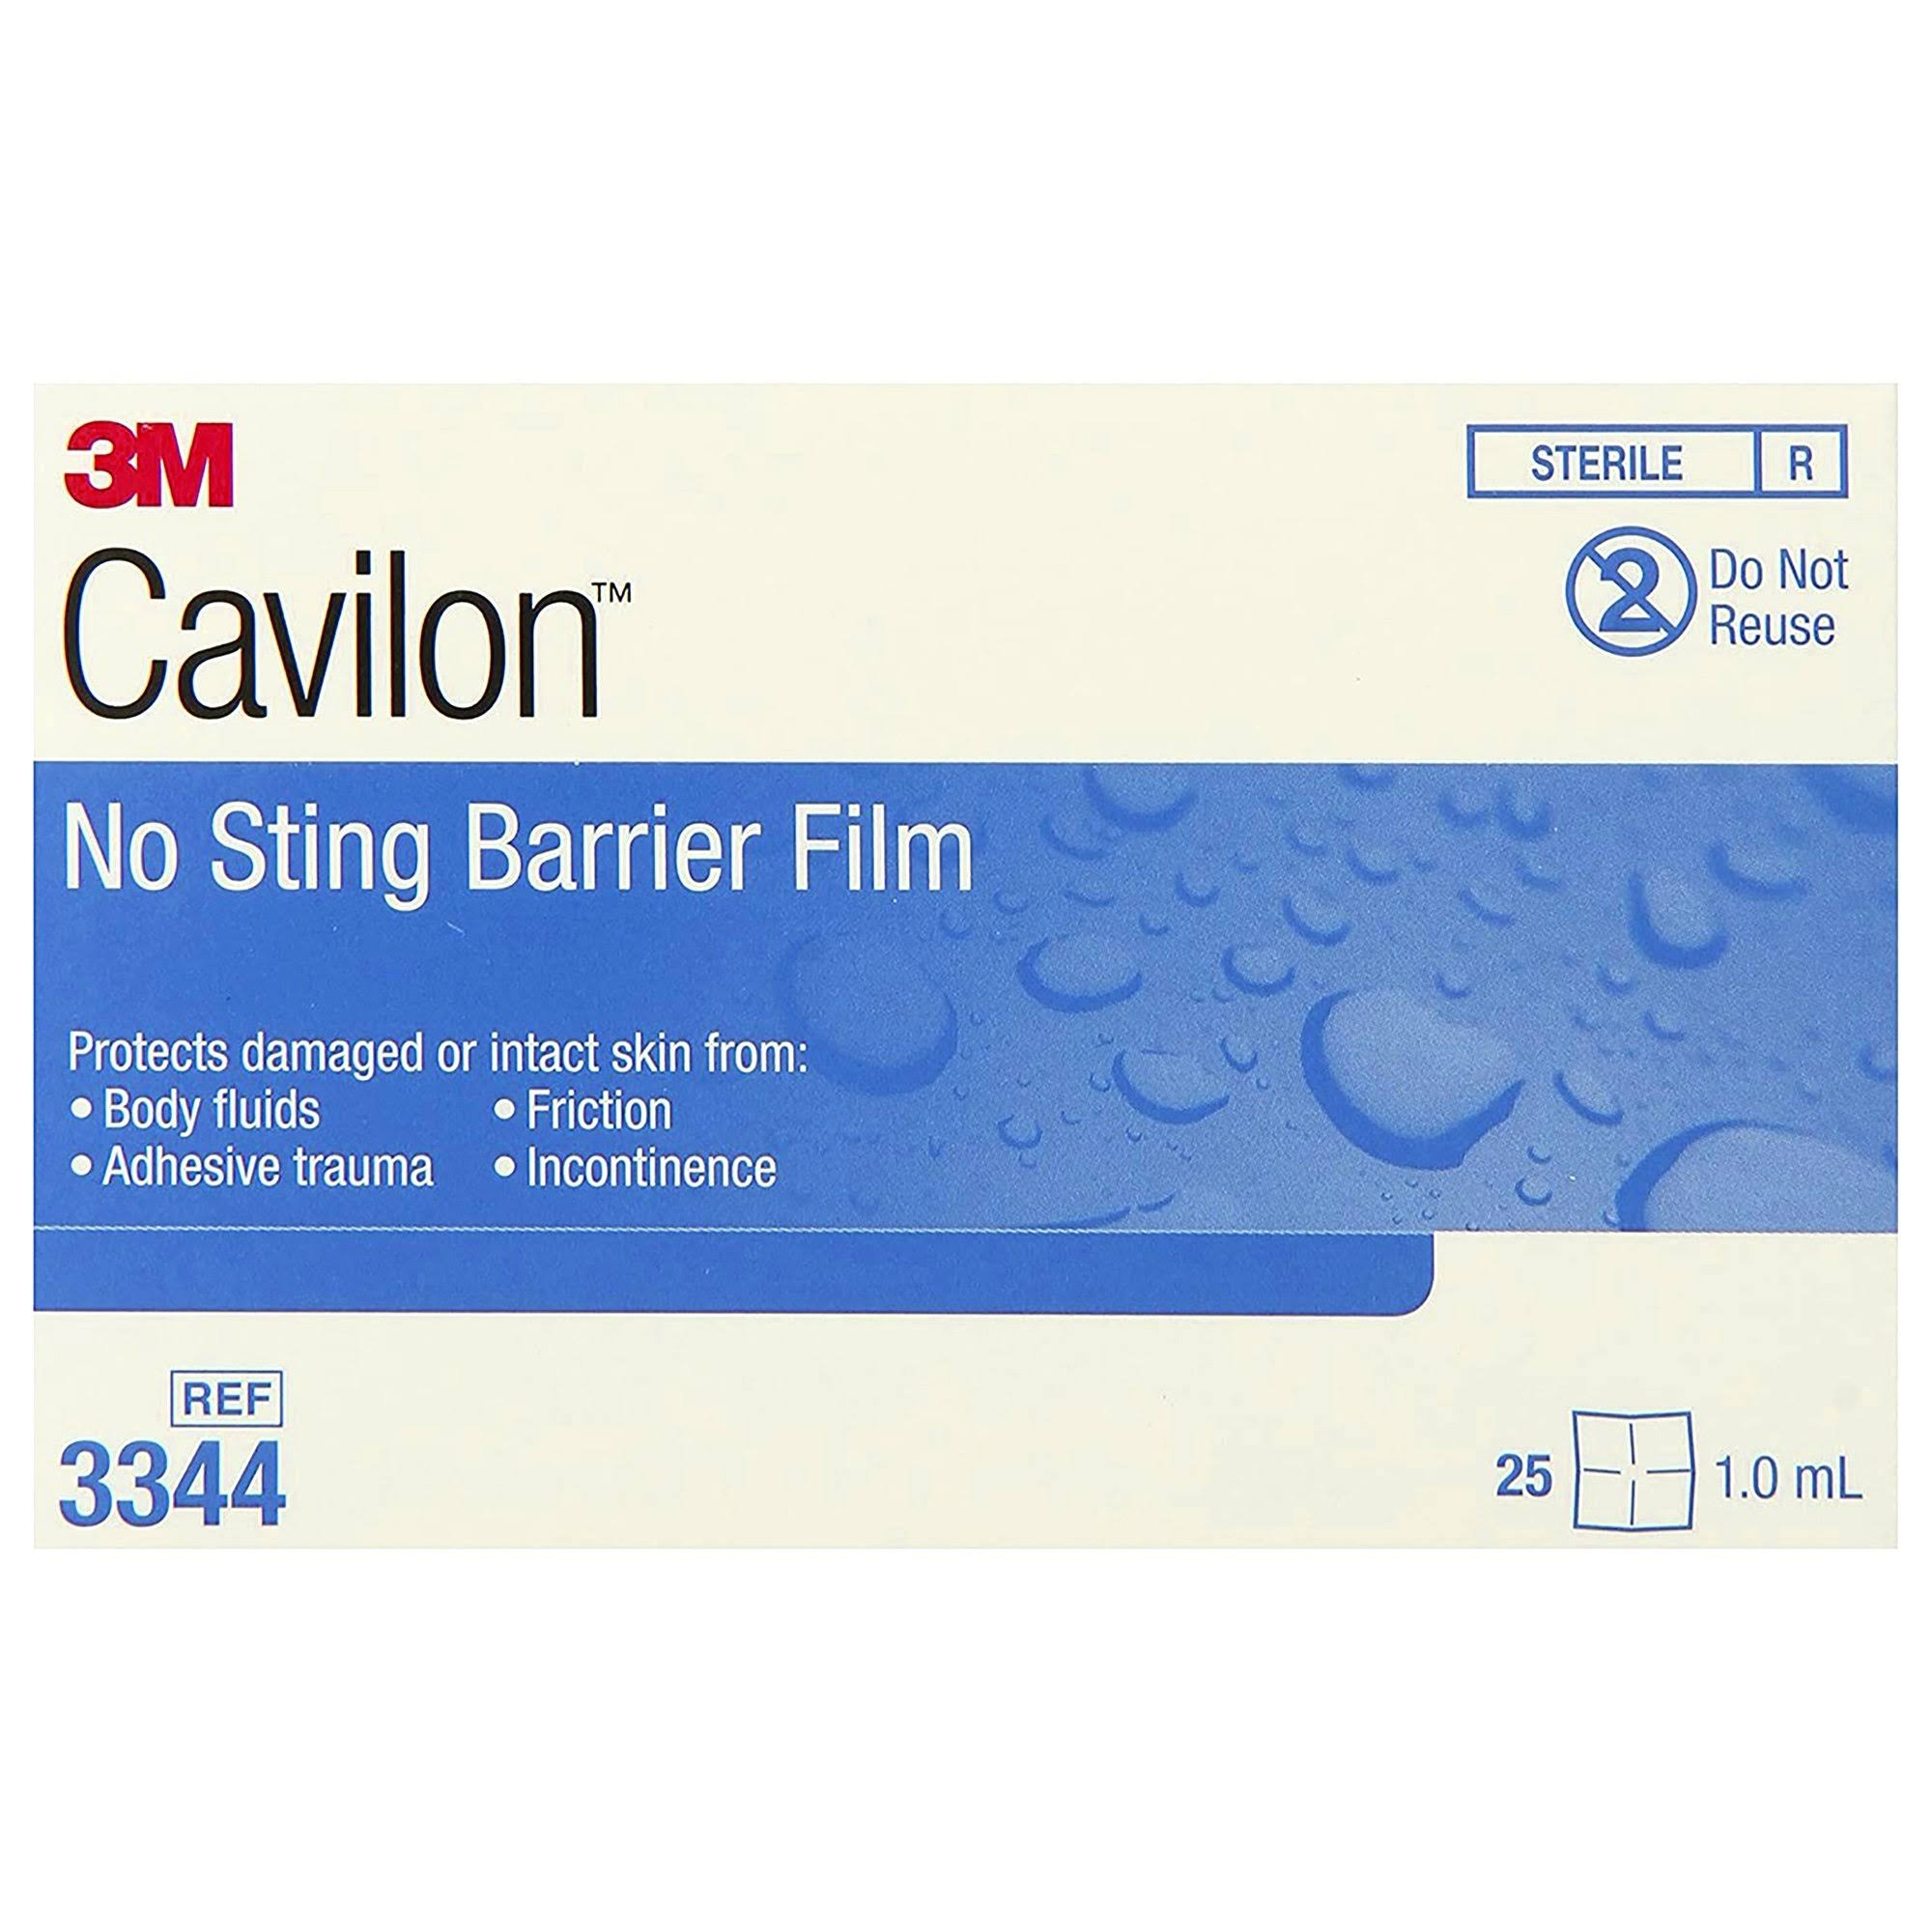 3M Cavilon Barrier Film Wipes, No Sting, Sterile